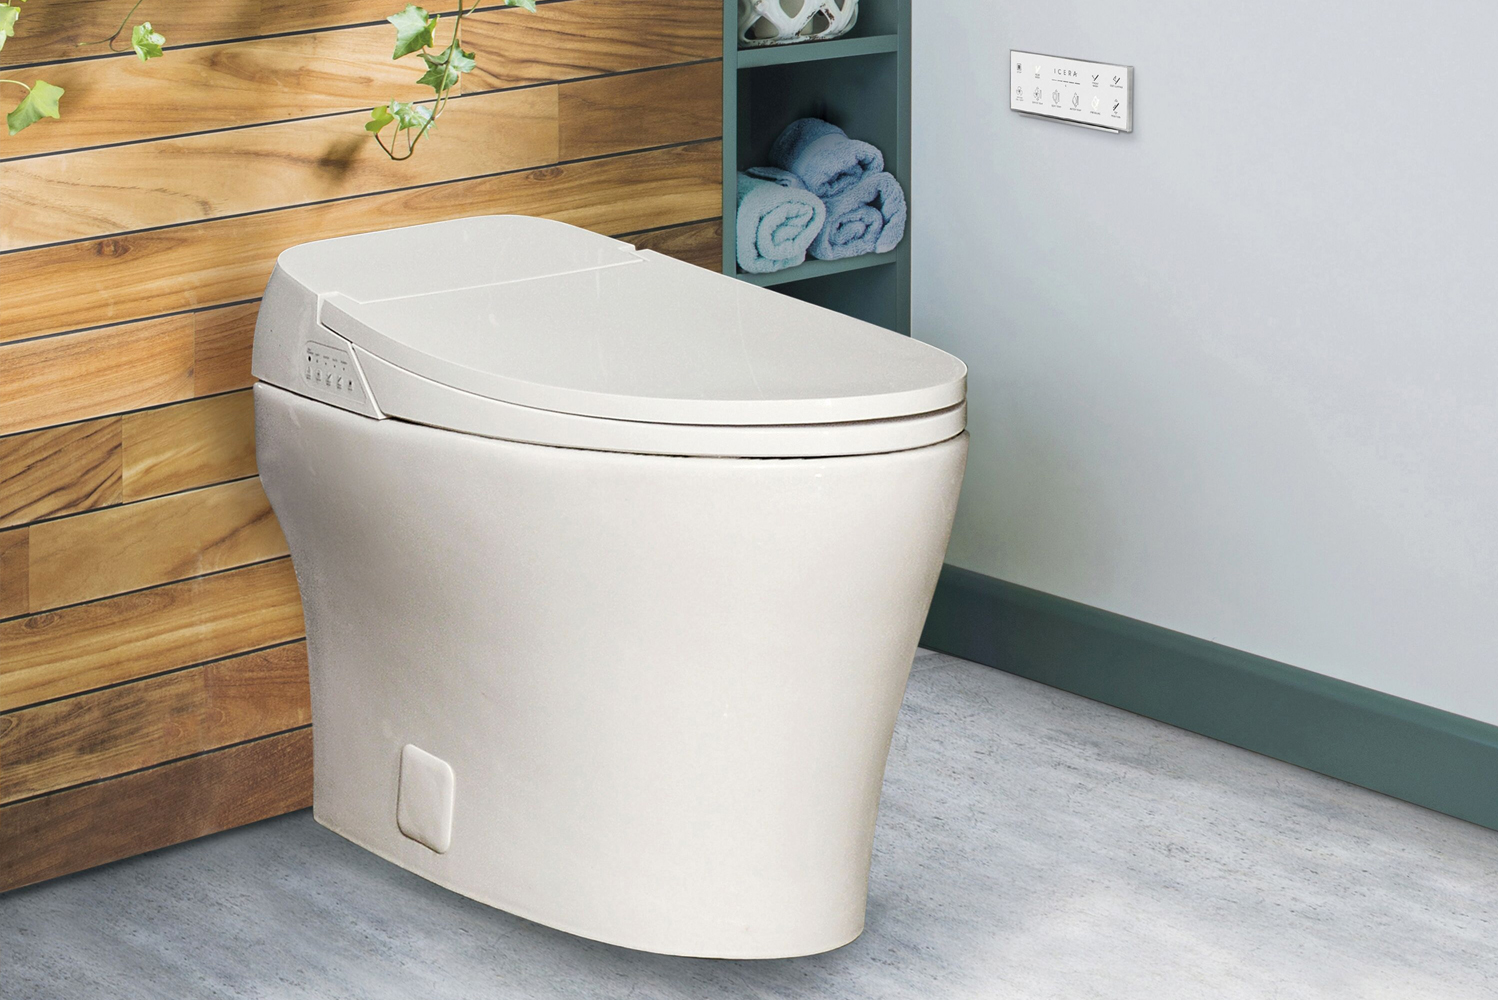 Icera introduced the Muse iWash integrated bidet toilet 